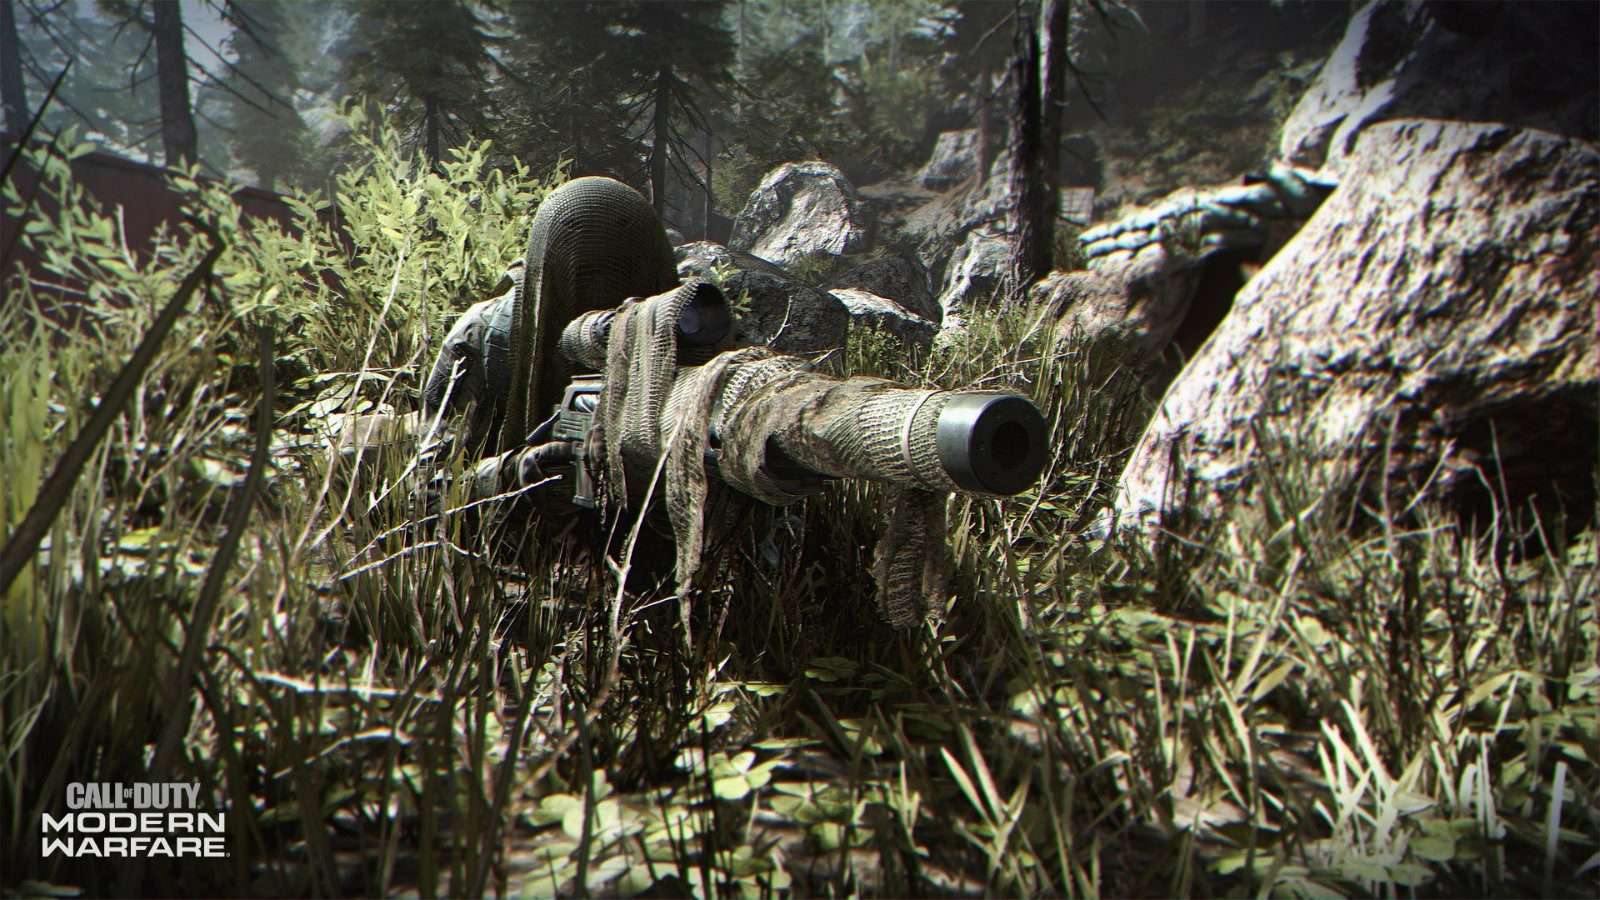 Call of Duty: Modern Warfare devs tease campaign gameplay coming soon